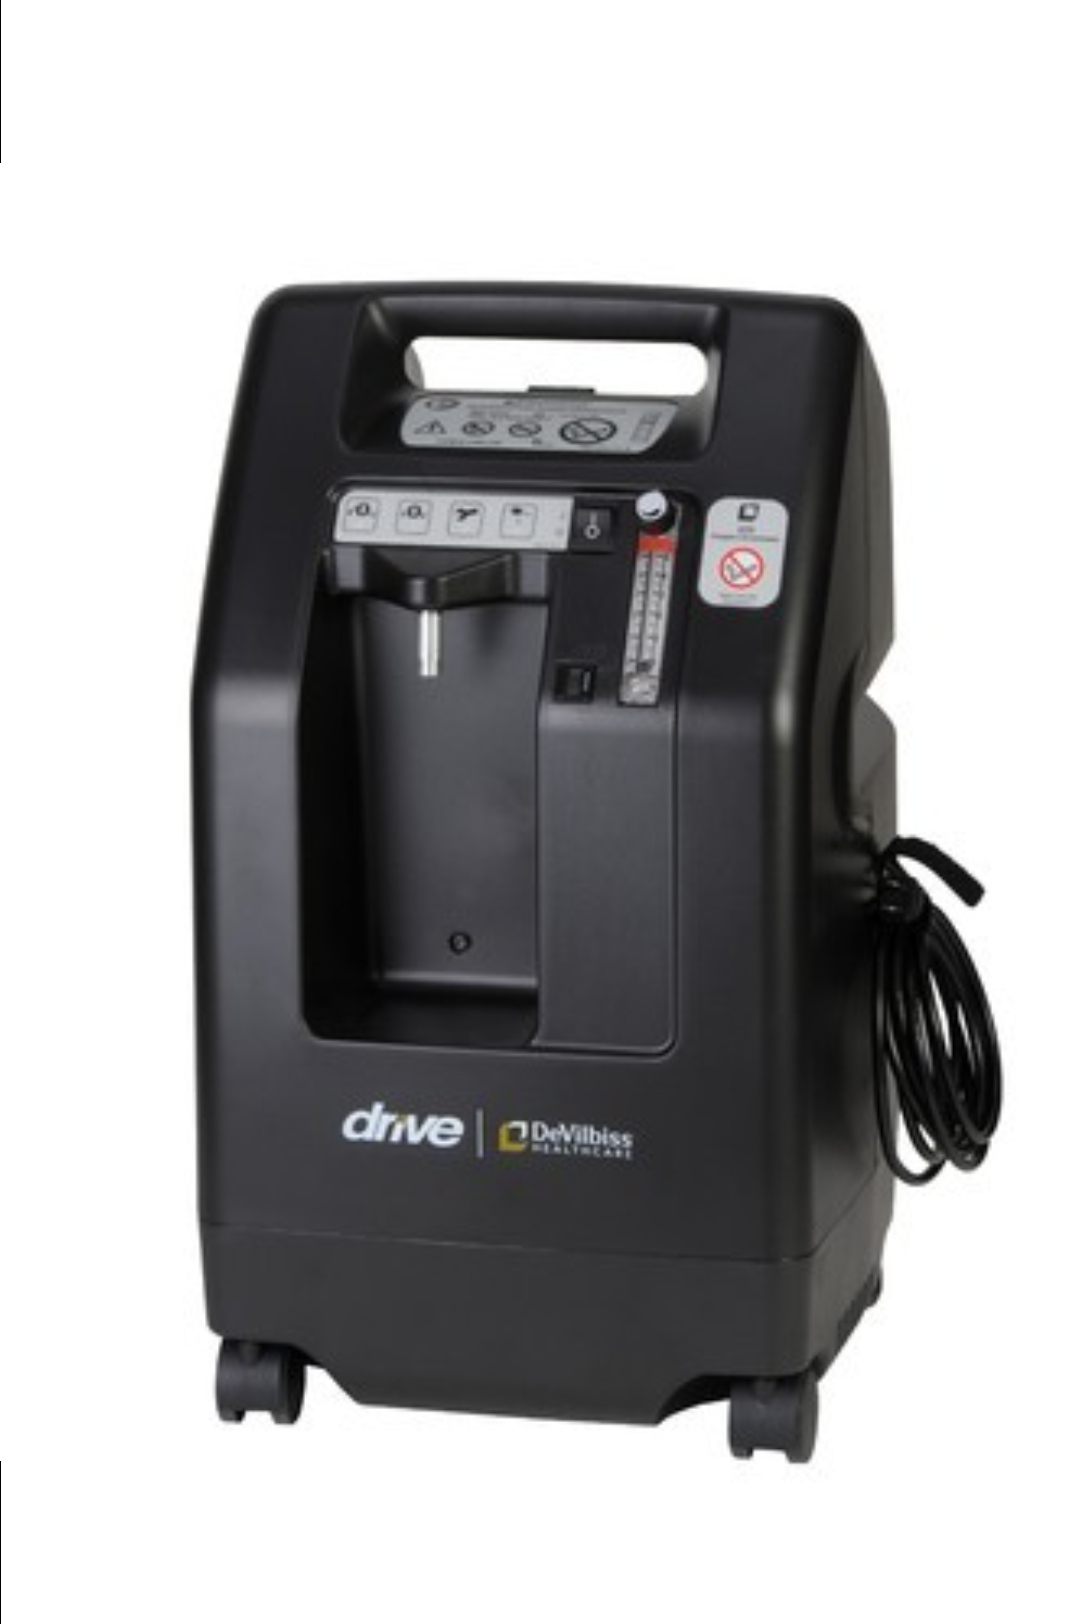 Devilbiss oxygen concentrator machine on rent sale